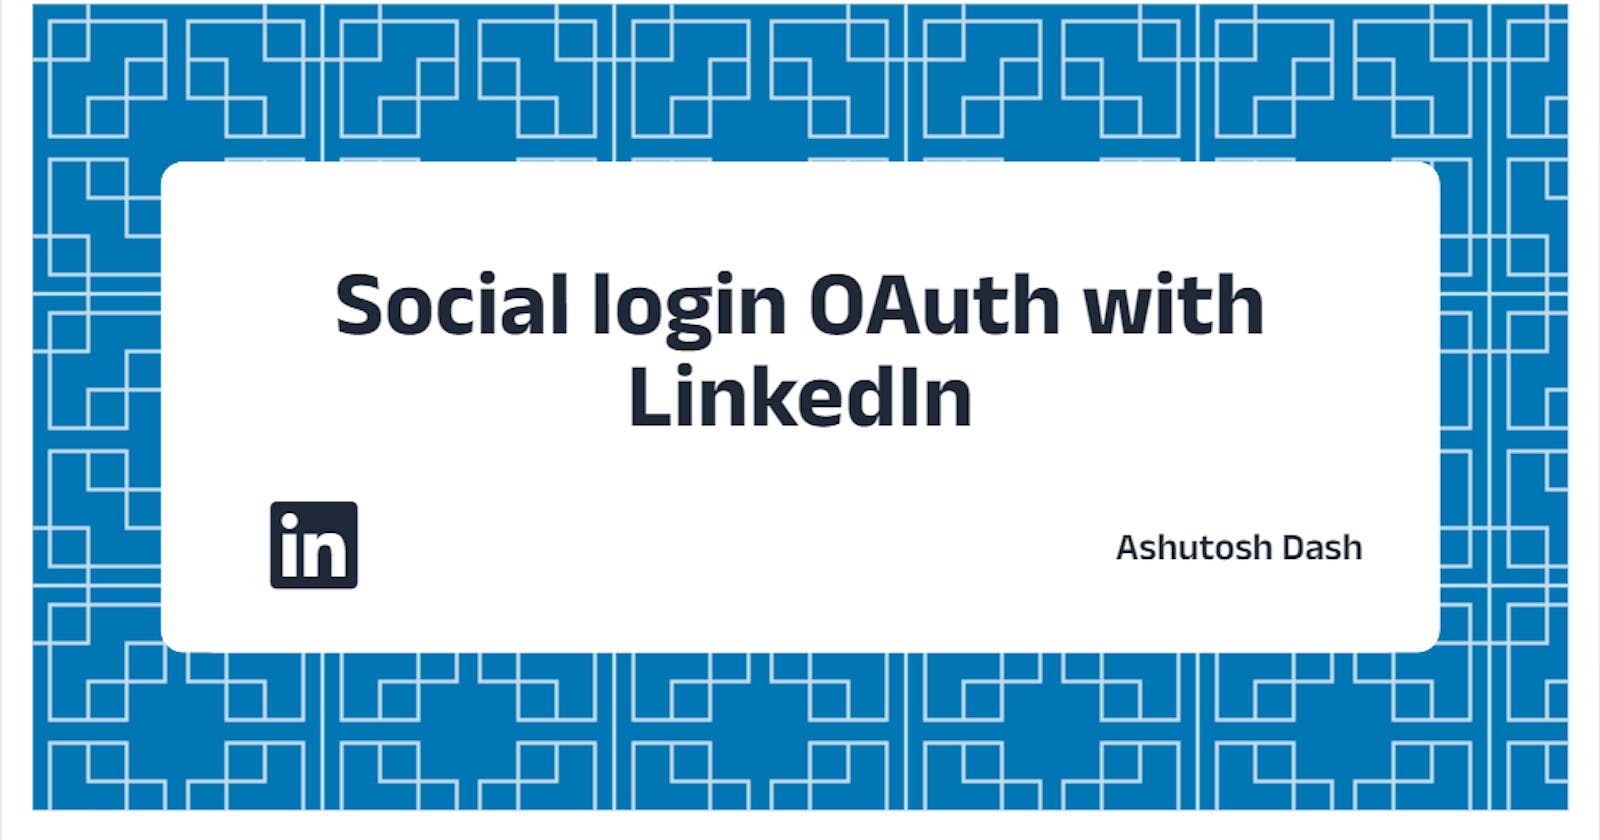 Social login OAuth with LinkedIn